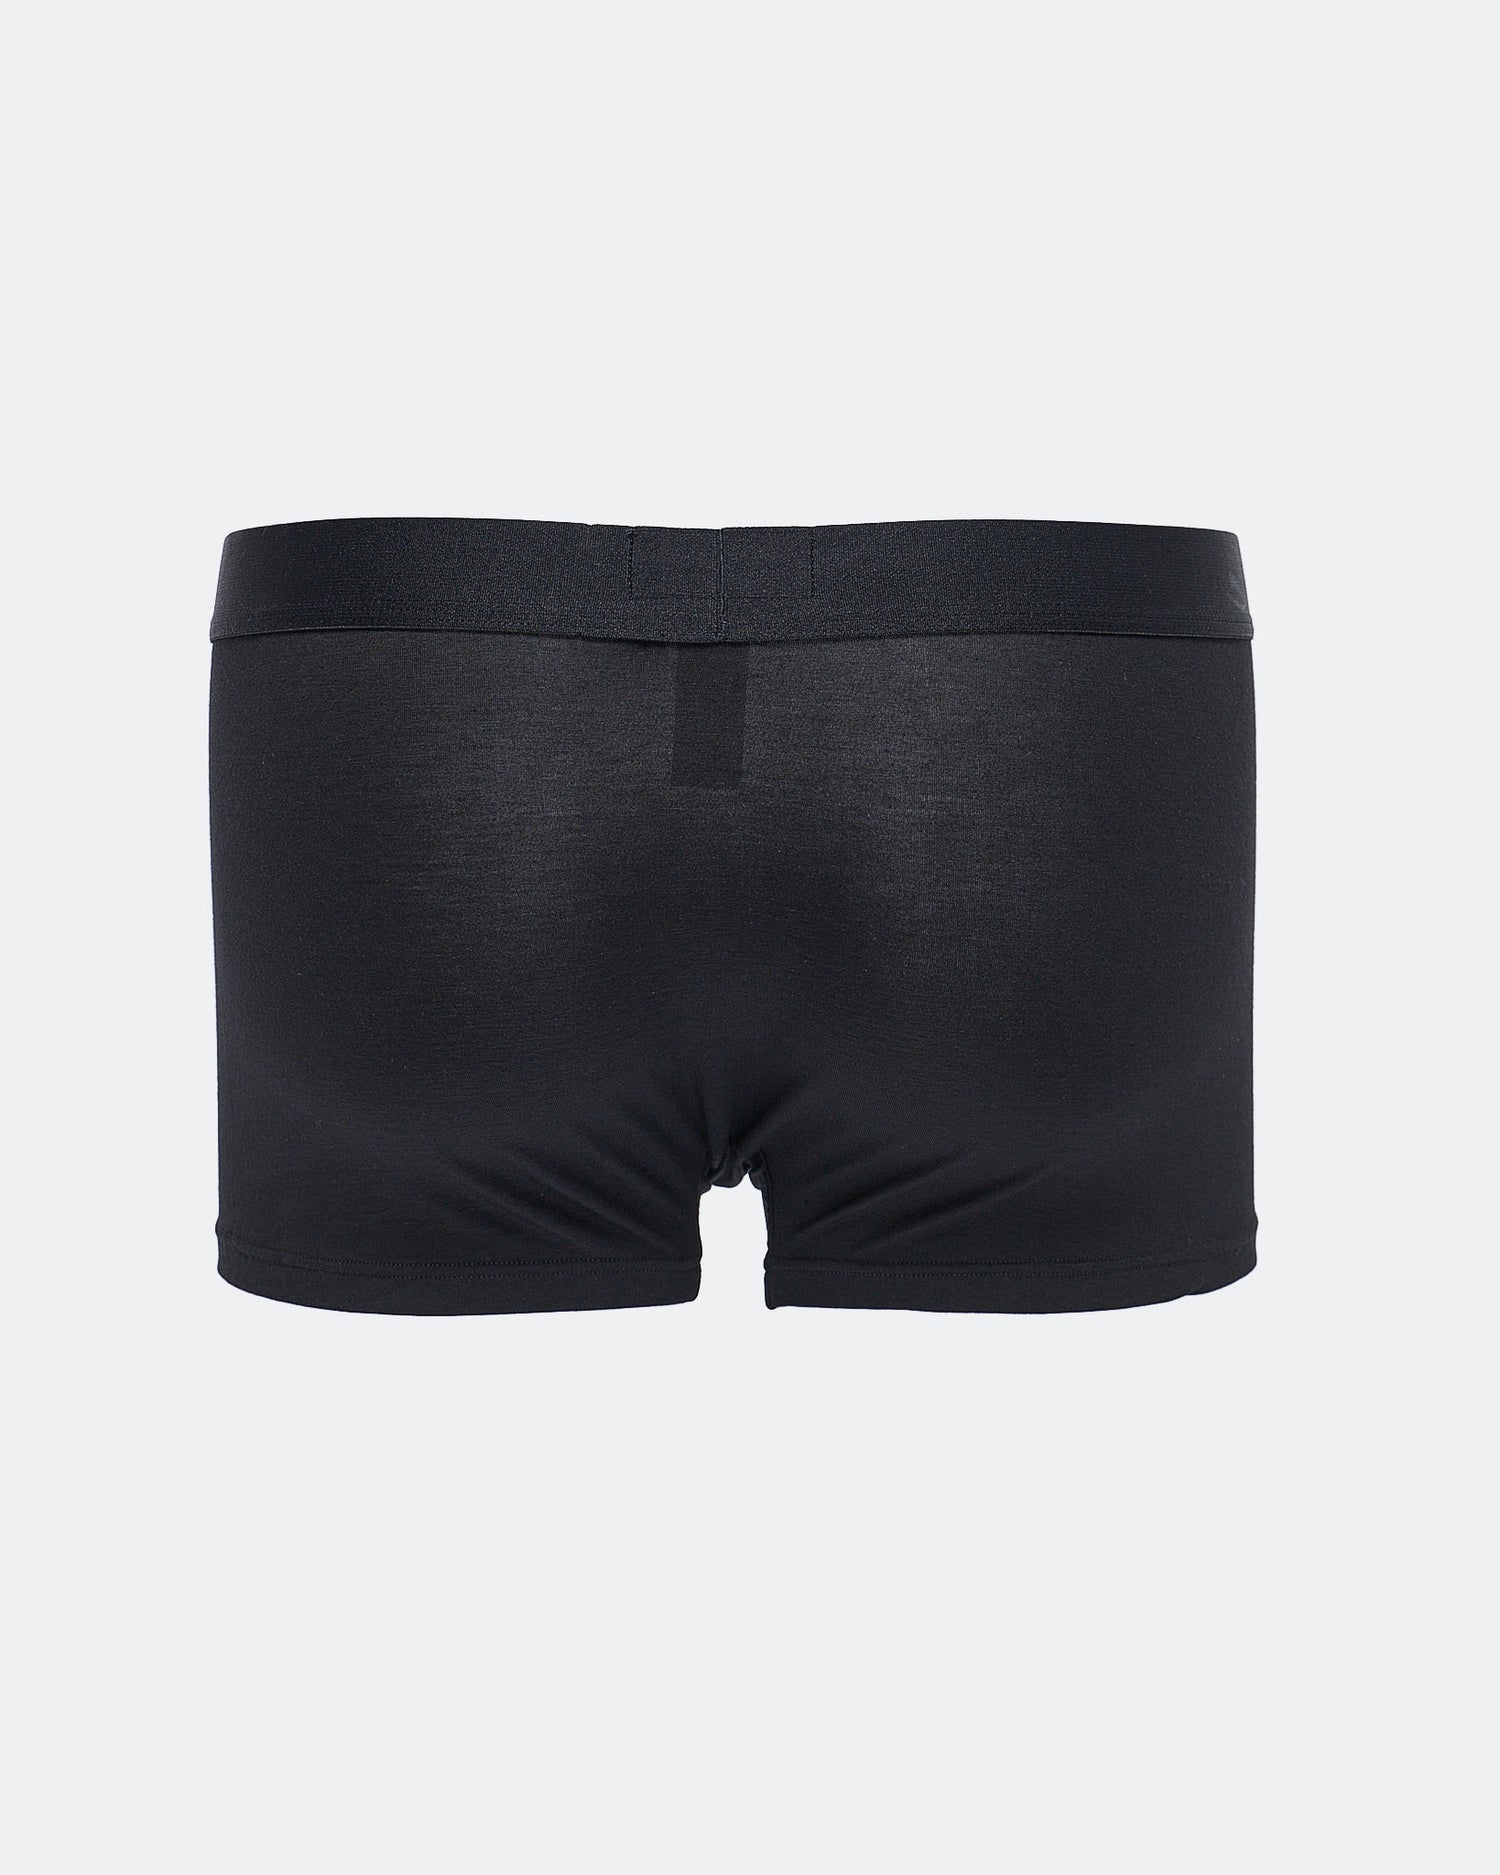 MOI OUTFIT-Armani Printed Men Underwear 6.50